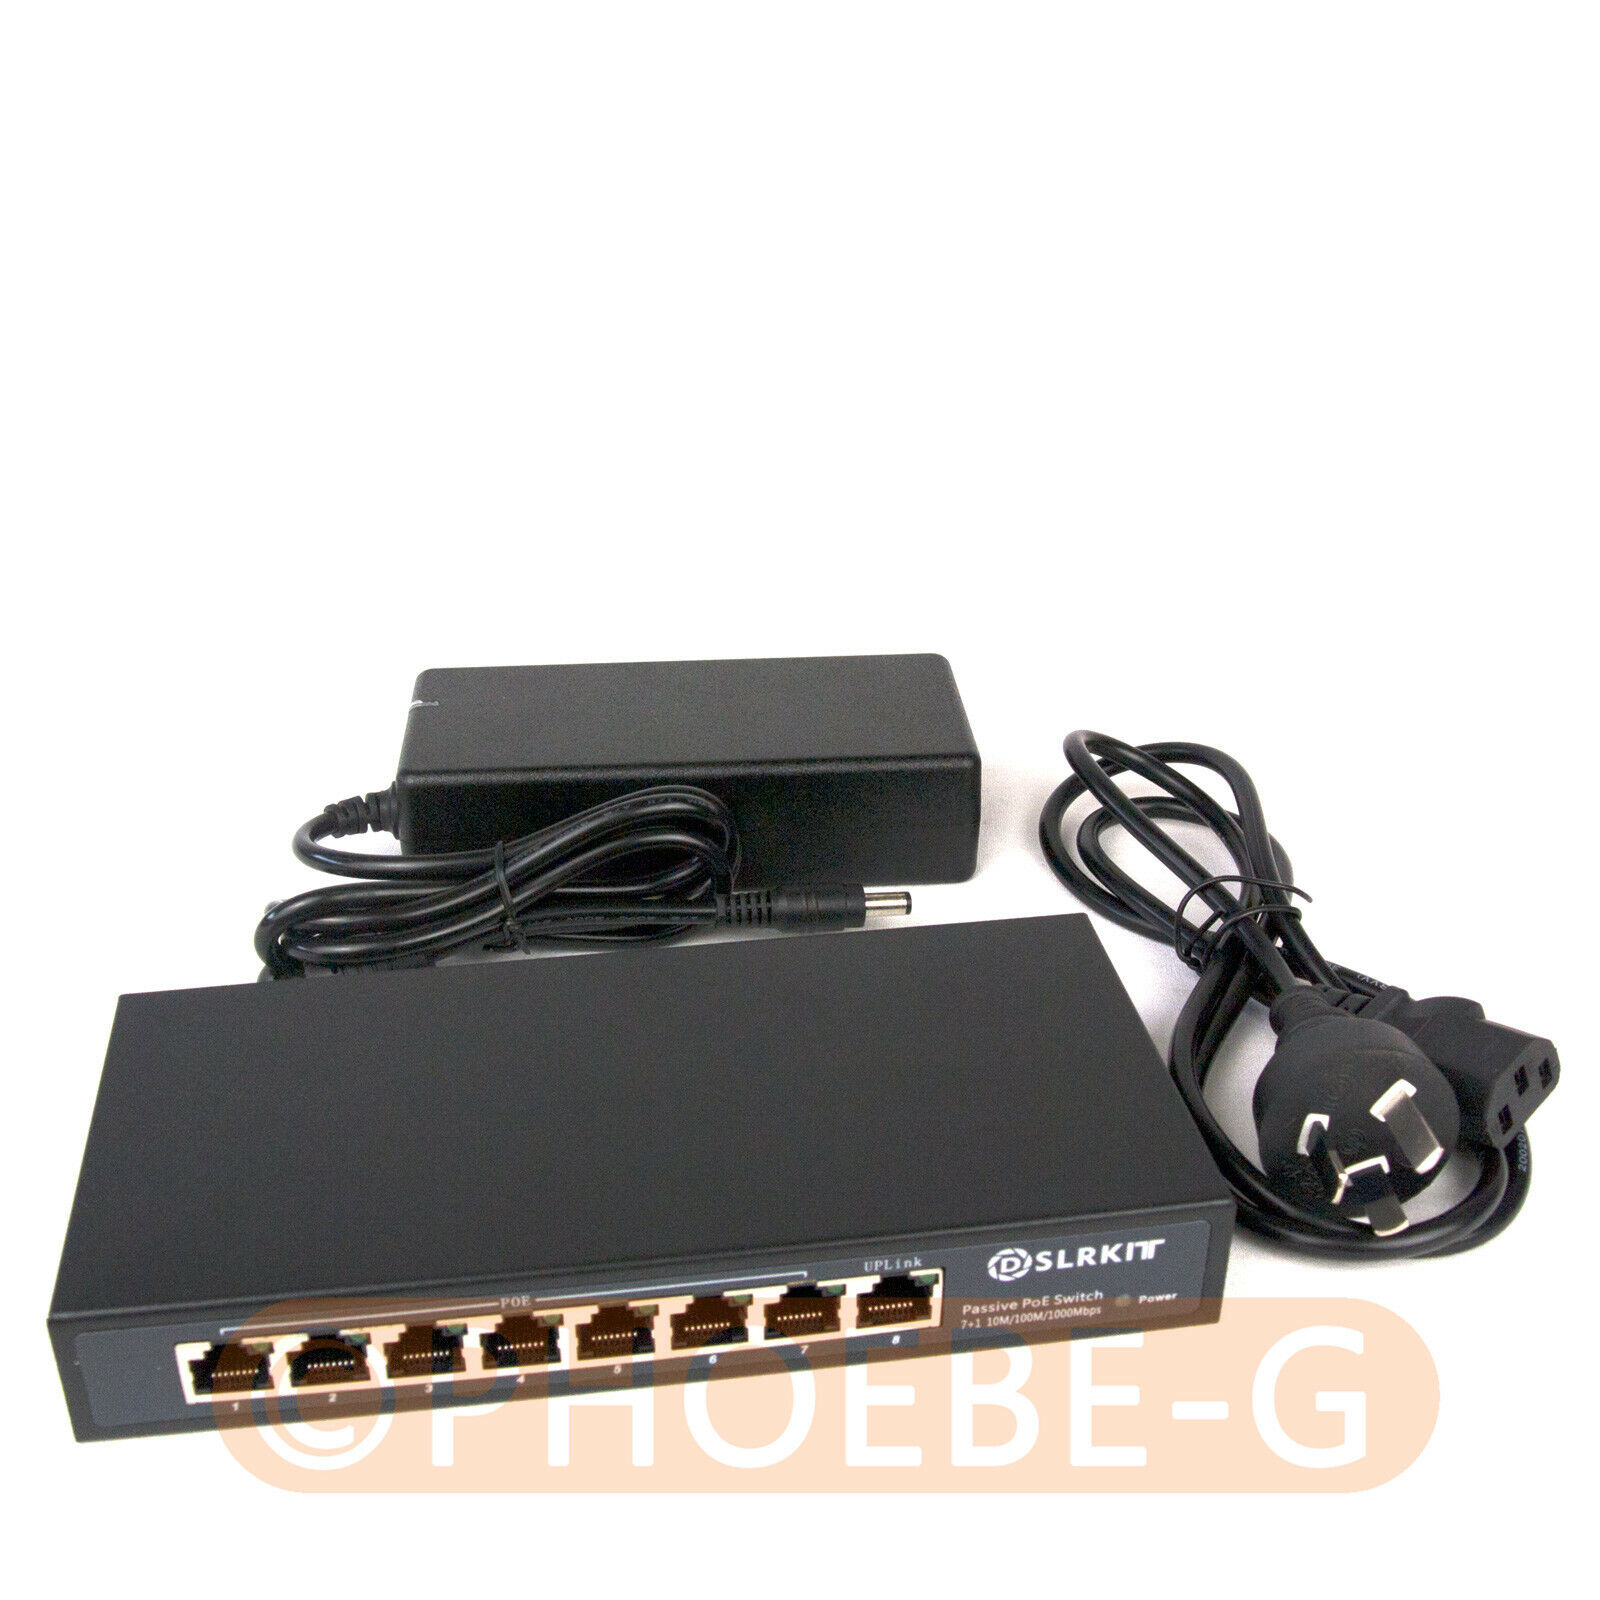 DSLRKIT ALL Gigabit 48V 120W 8 Ports 7 PoE Injector Power Over Ethernet Switch